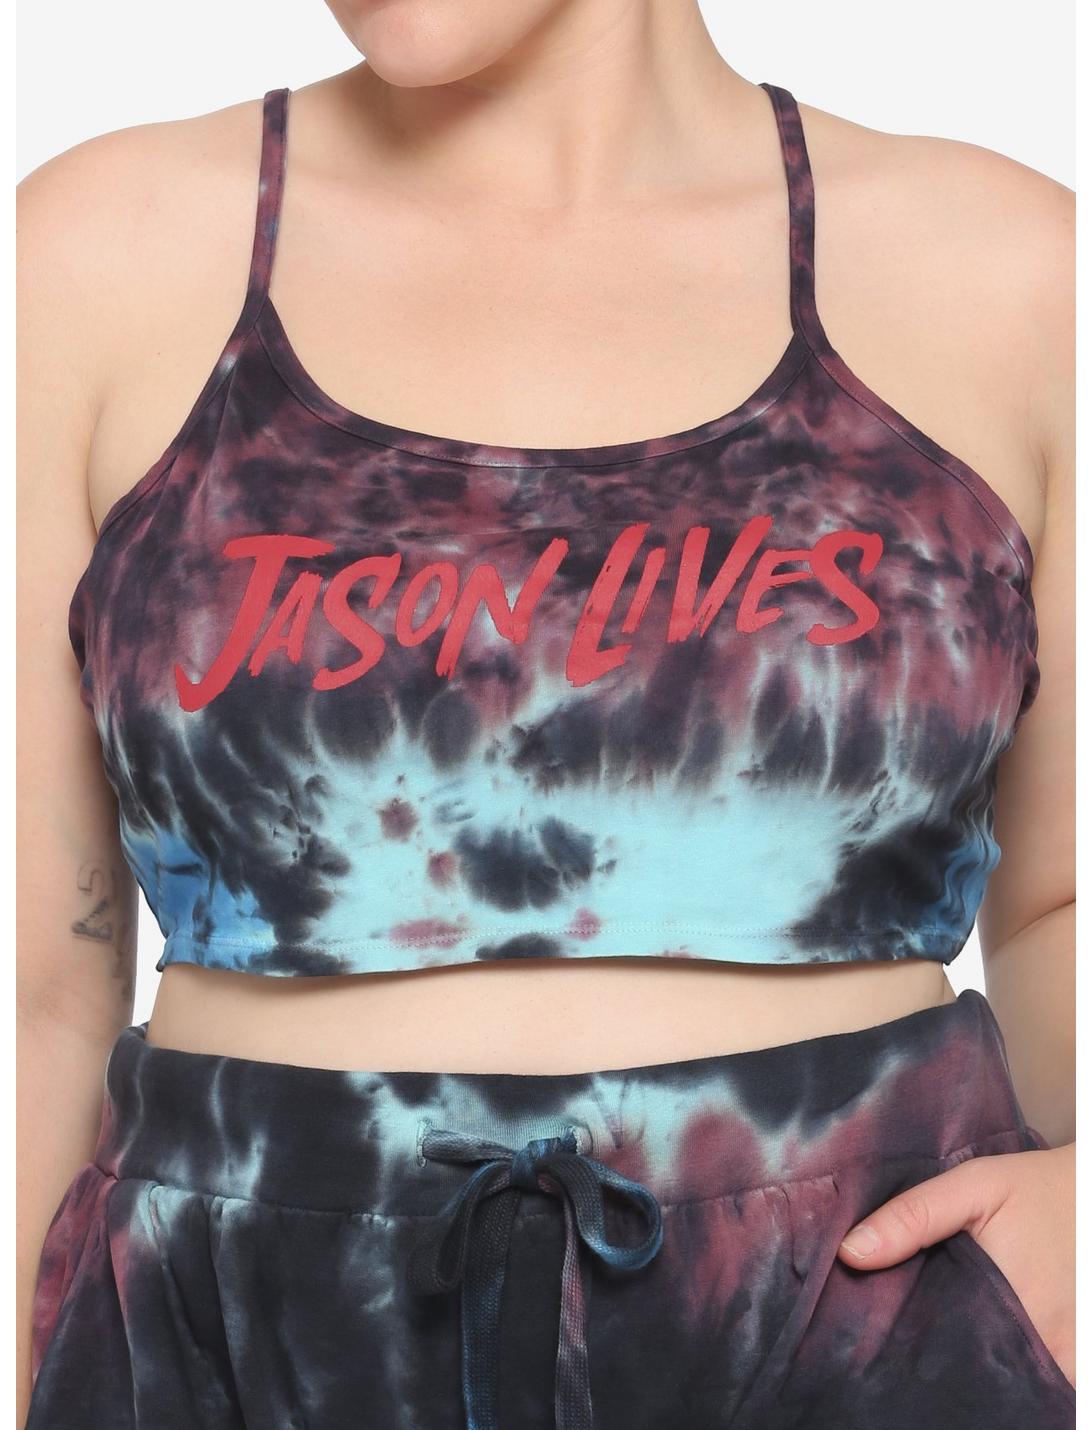 Friday The 13th Part VI: Jason Lives Tie-Dye Girls Crop Lounge Tank Top Plus Size, MULTI, hi-res